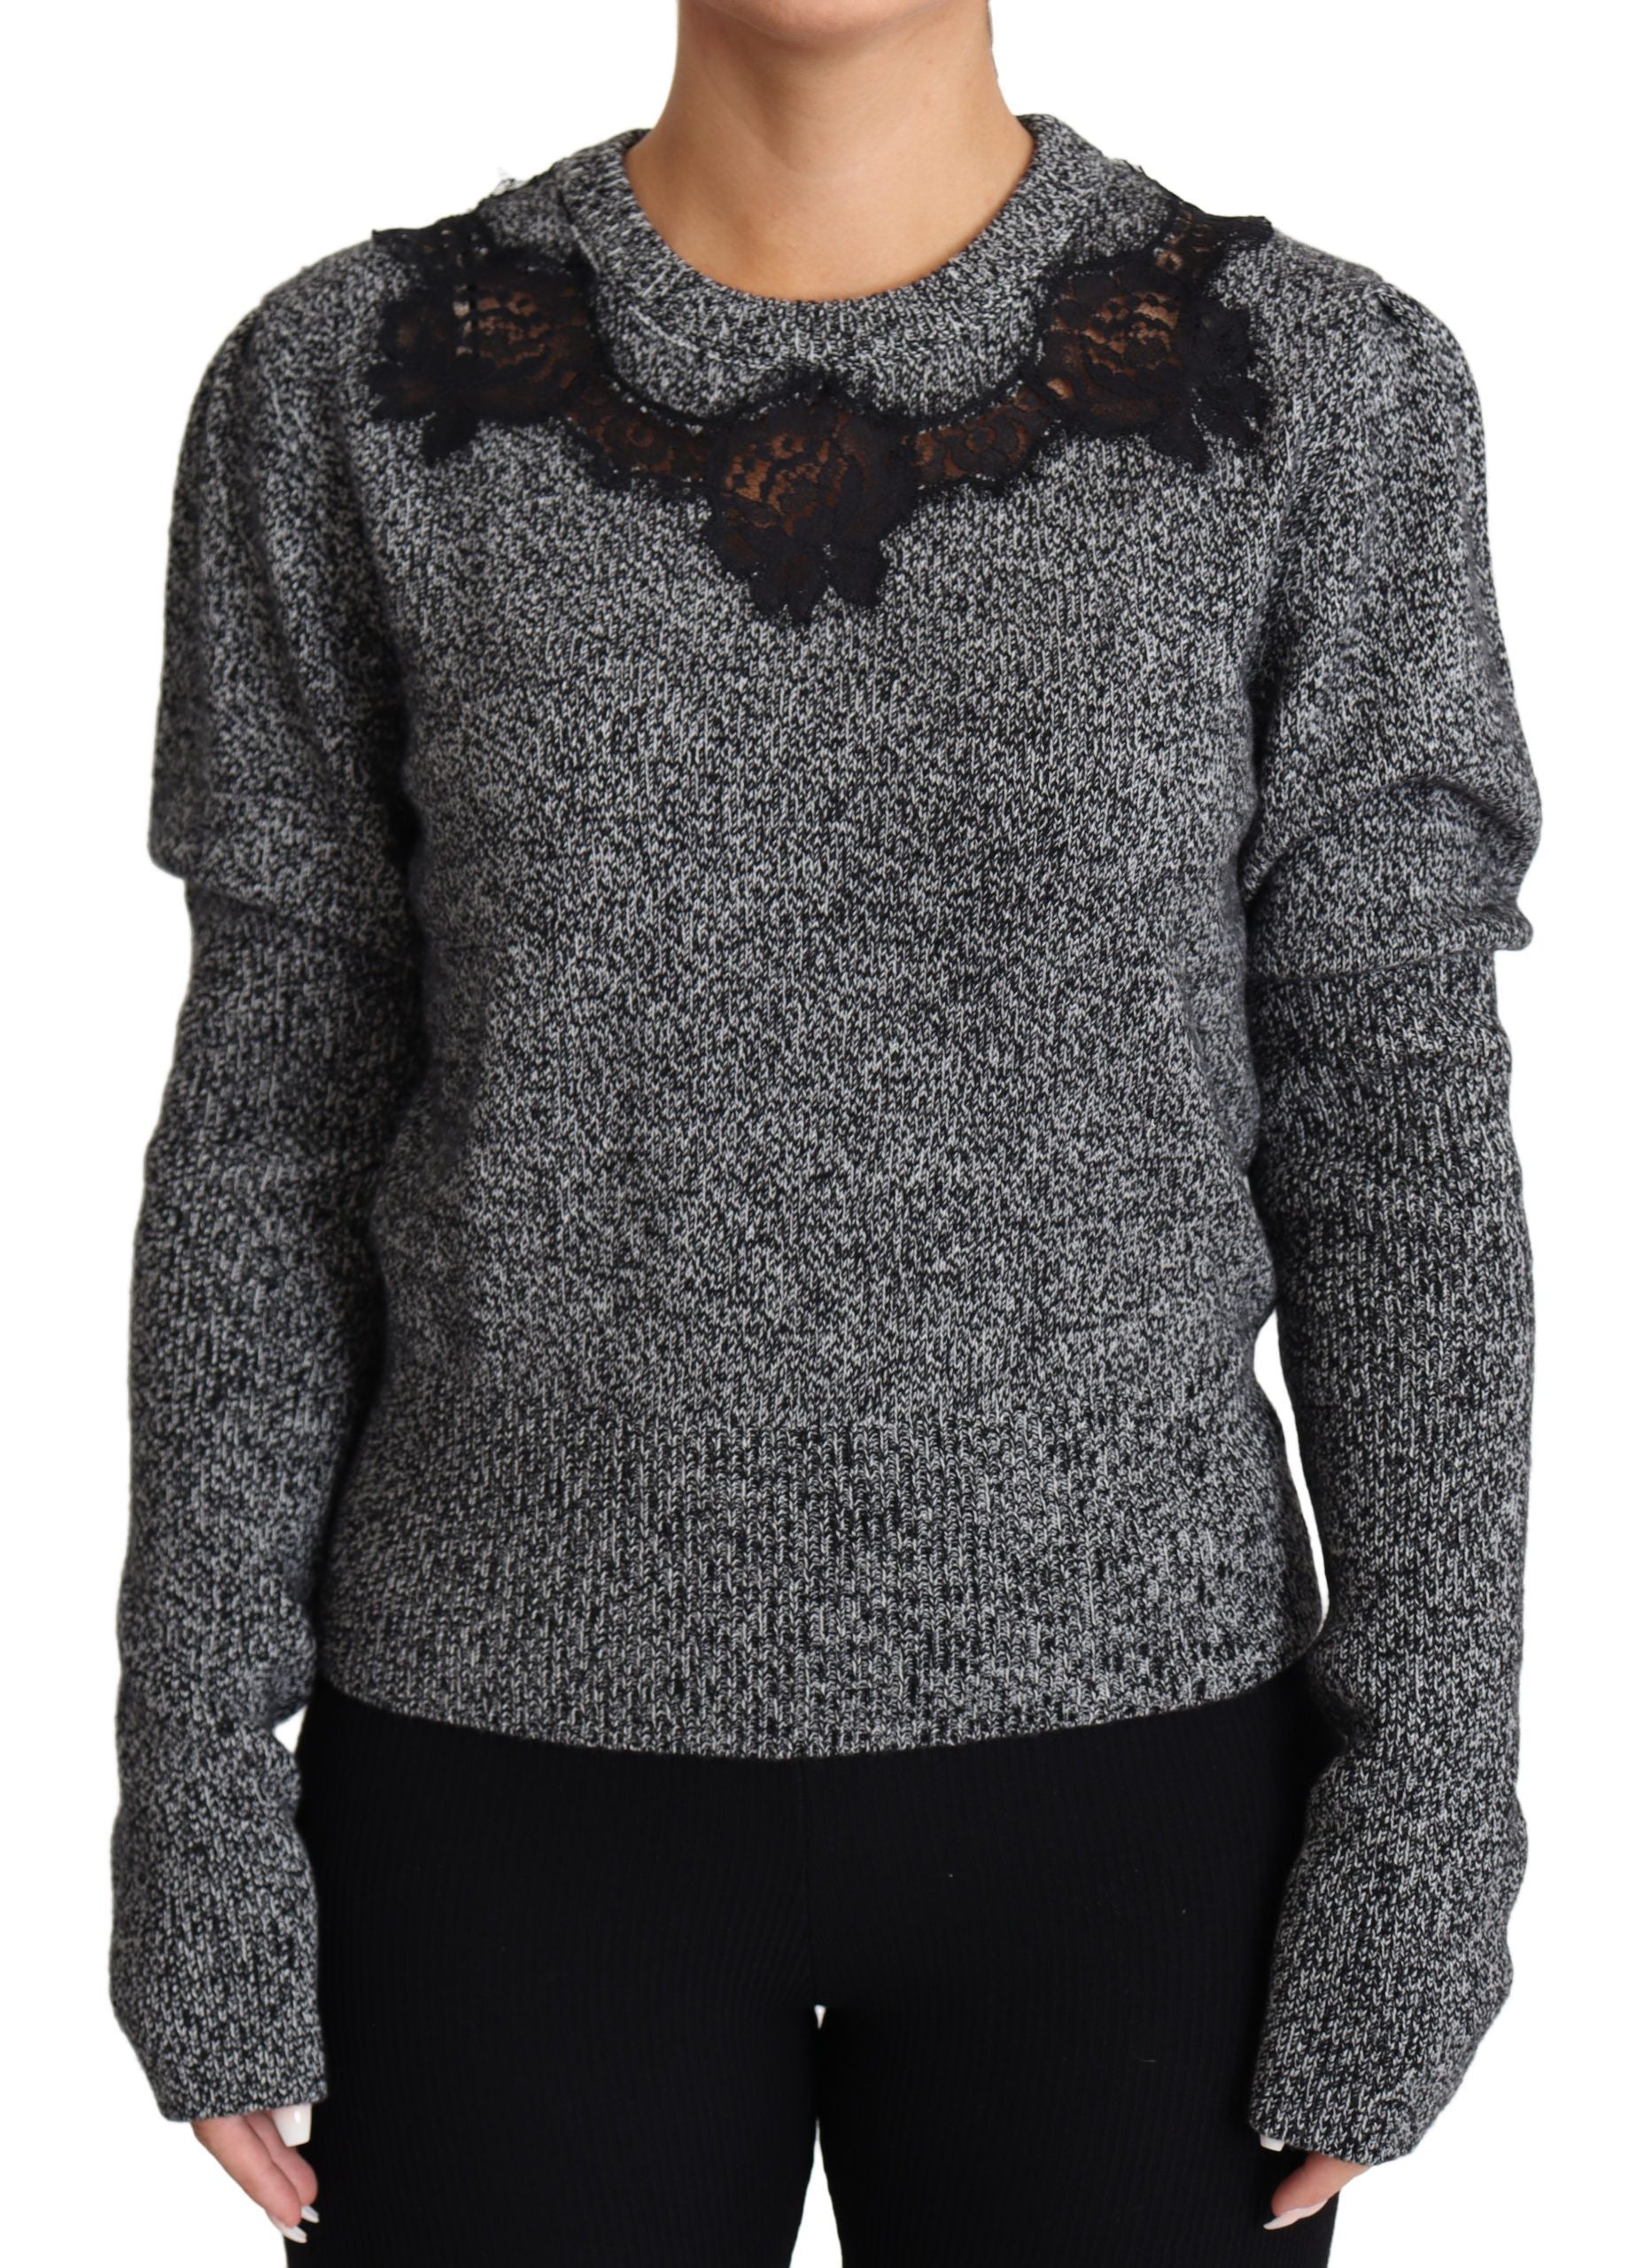 DOLCE & GABBANA Dolce & Gabbana  Lace Trimmed Pullover Cashmere Women's Sweater